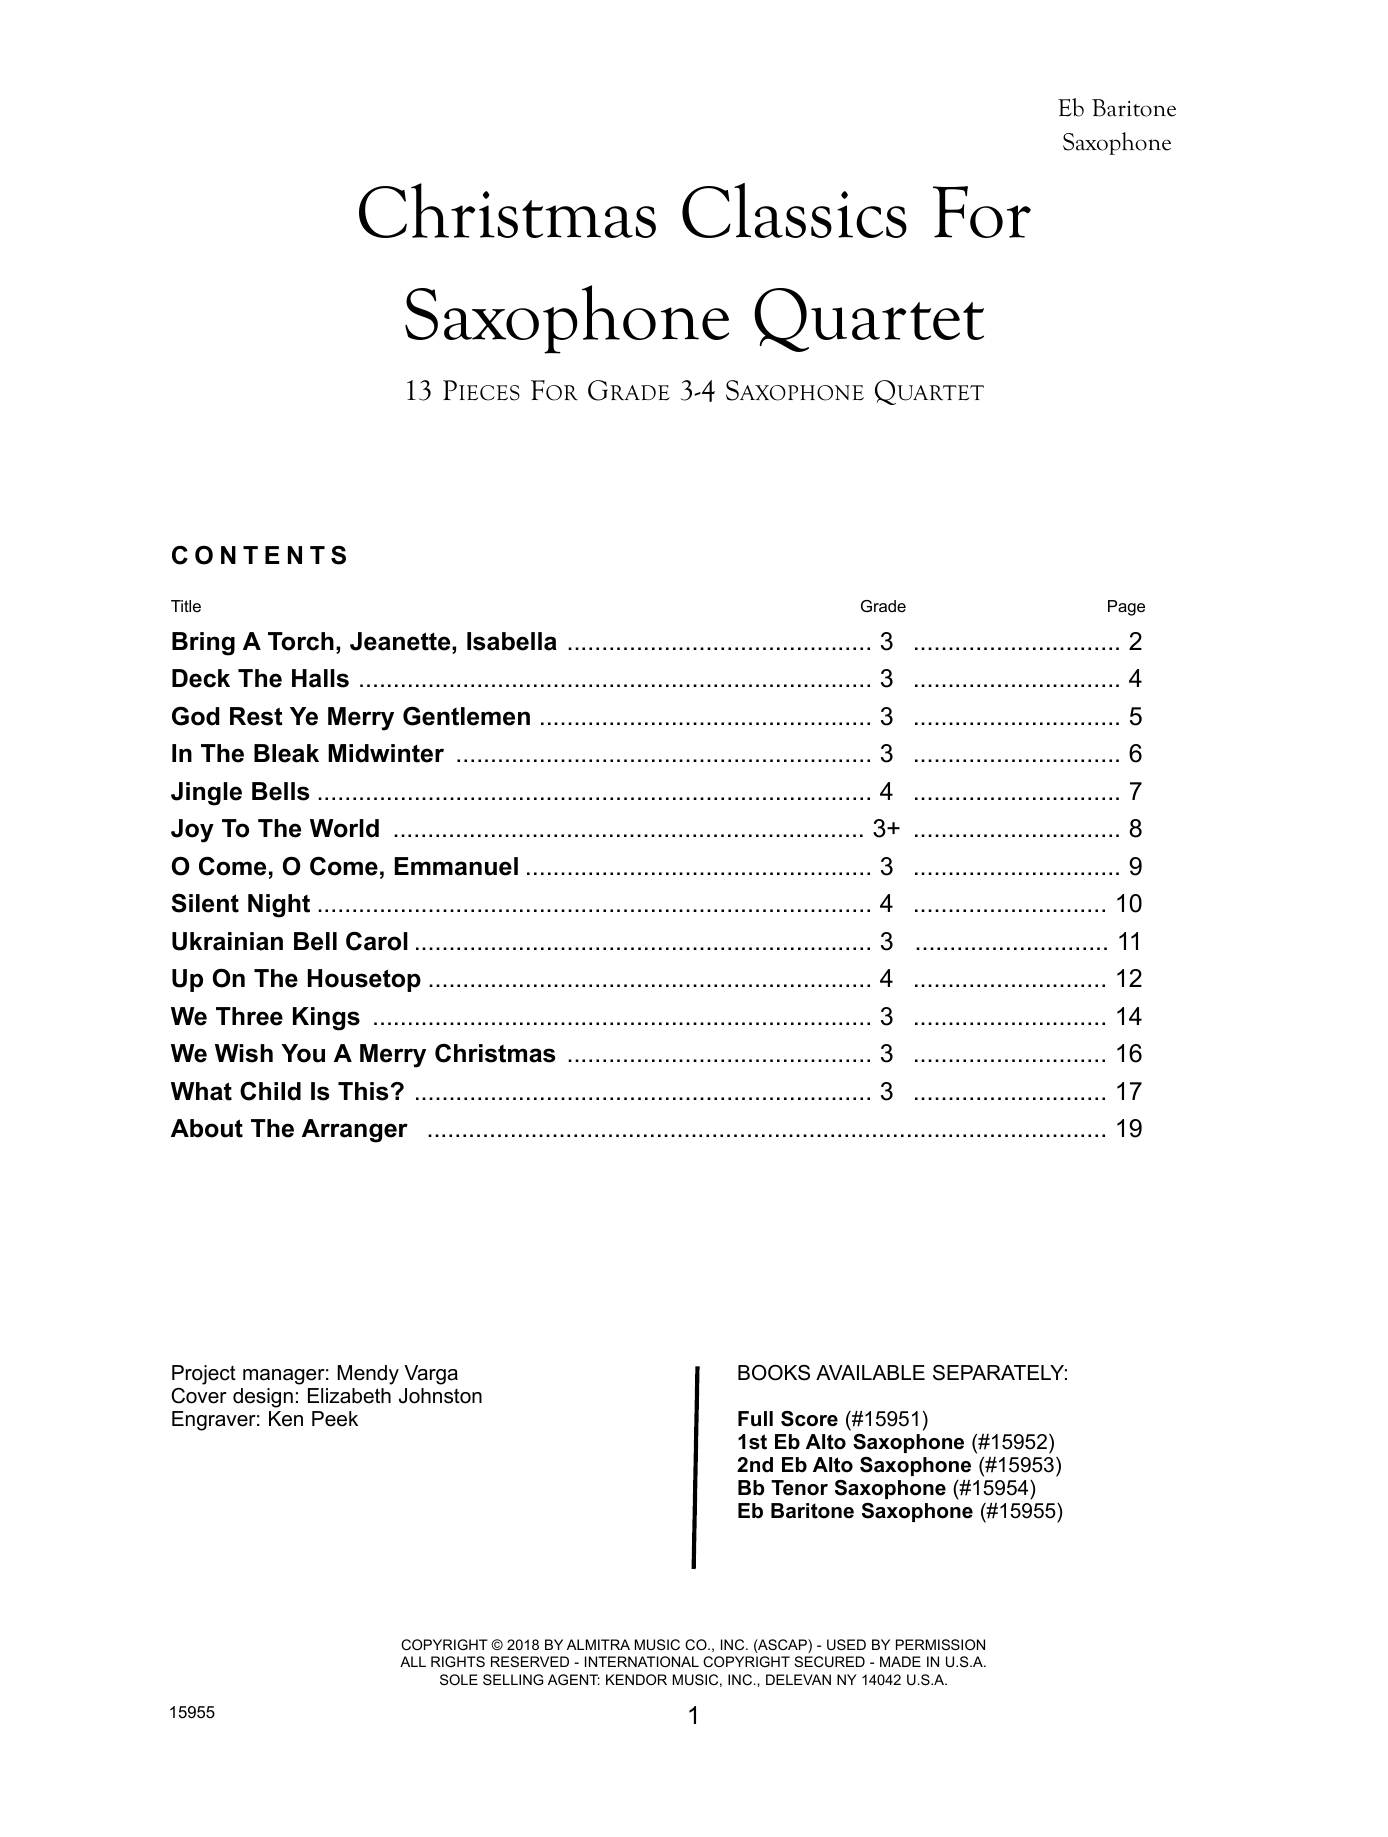 Christmas Classics For Saxophone Quartet - Eb Baritone Saxophone (Woodwind Ensemble) von Frank J. Halferty